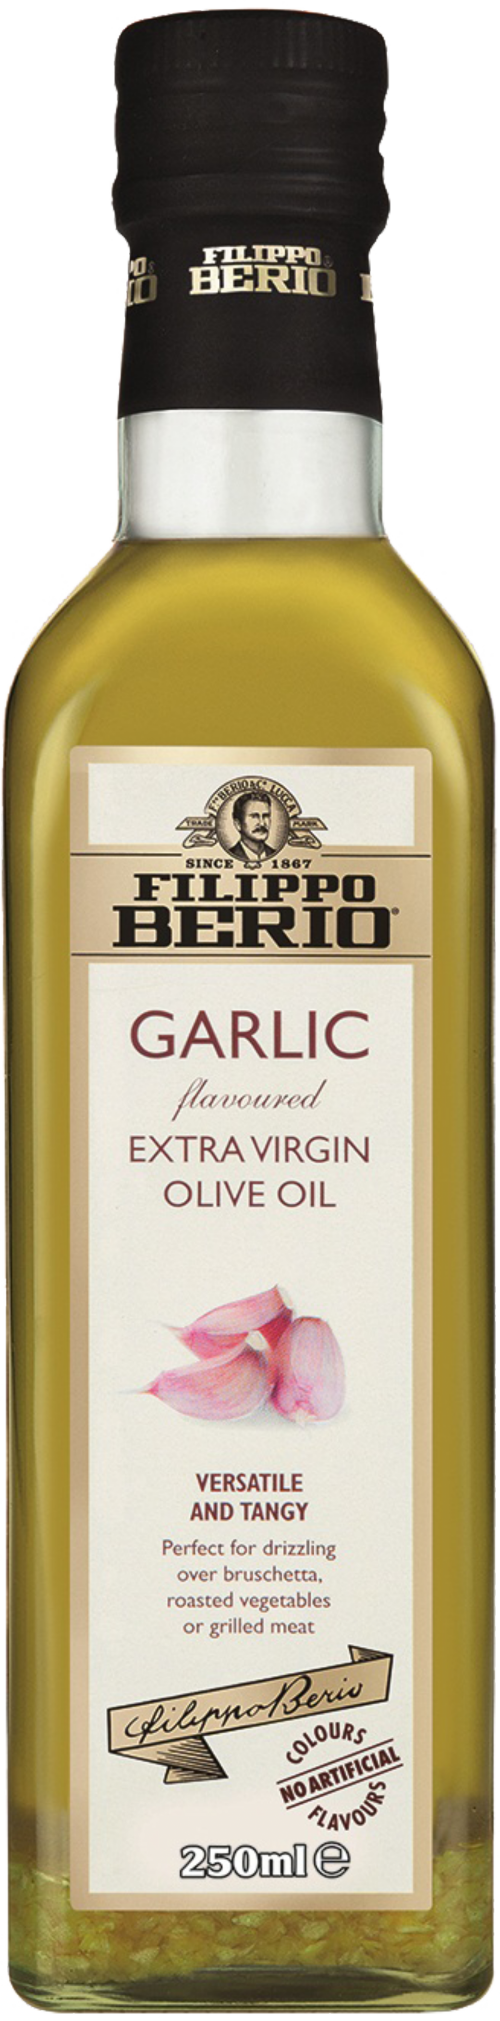 FILIPPO BERIO Extra Virgin Olive Oil -Garlic Flavoured 250ml